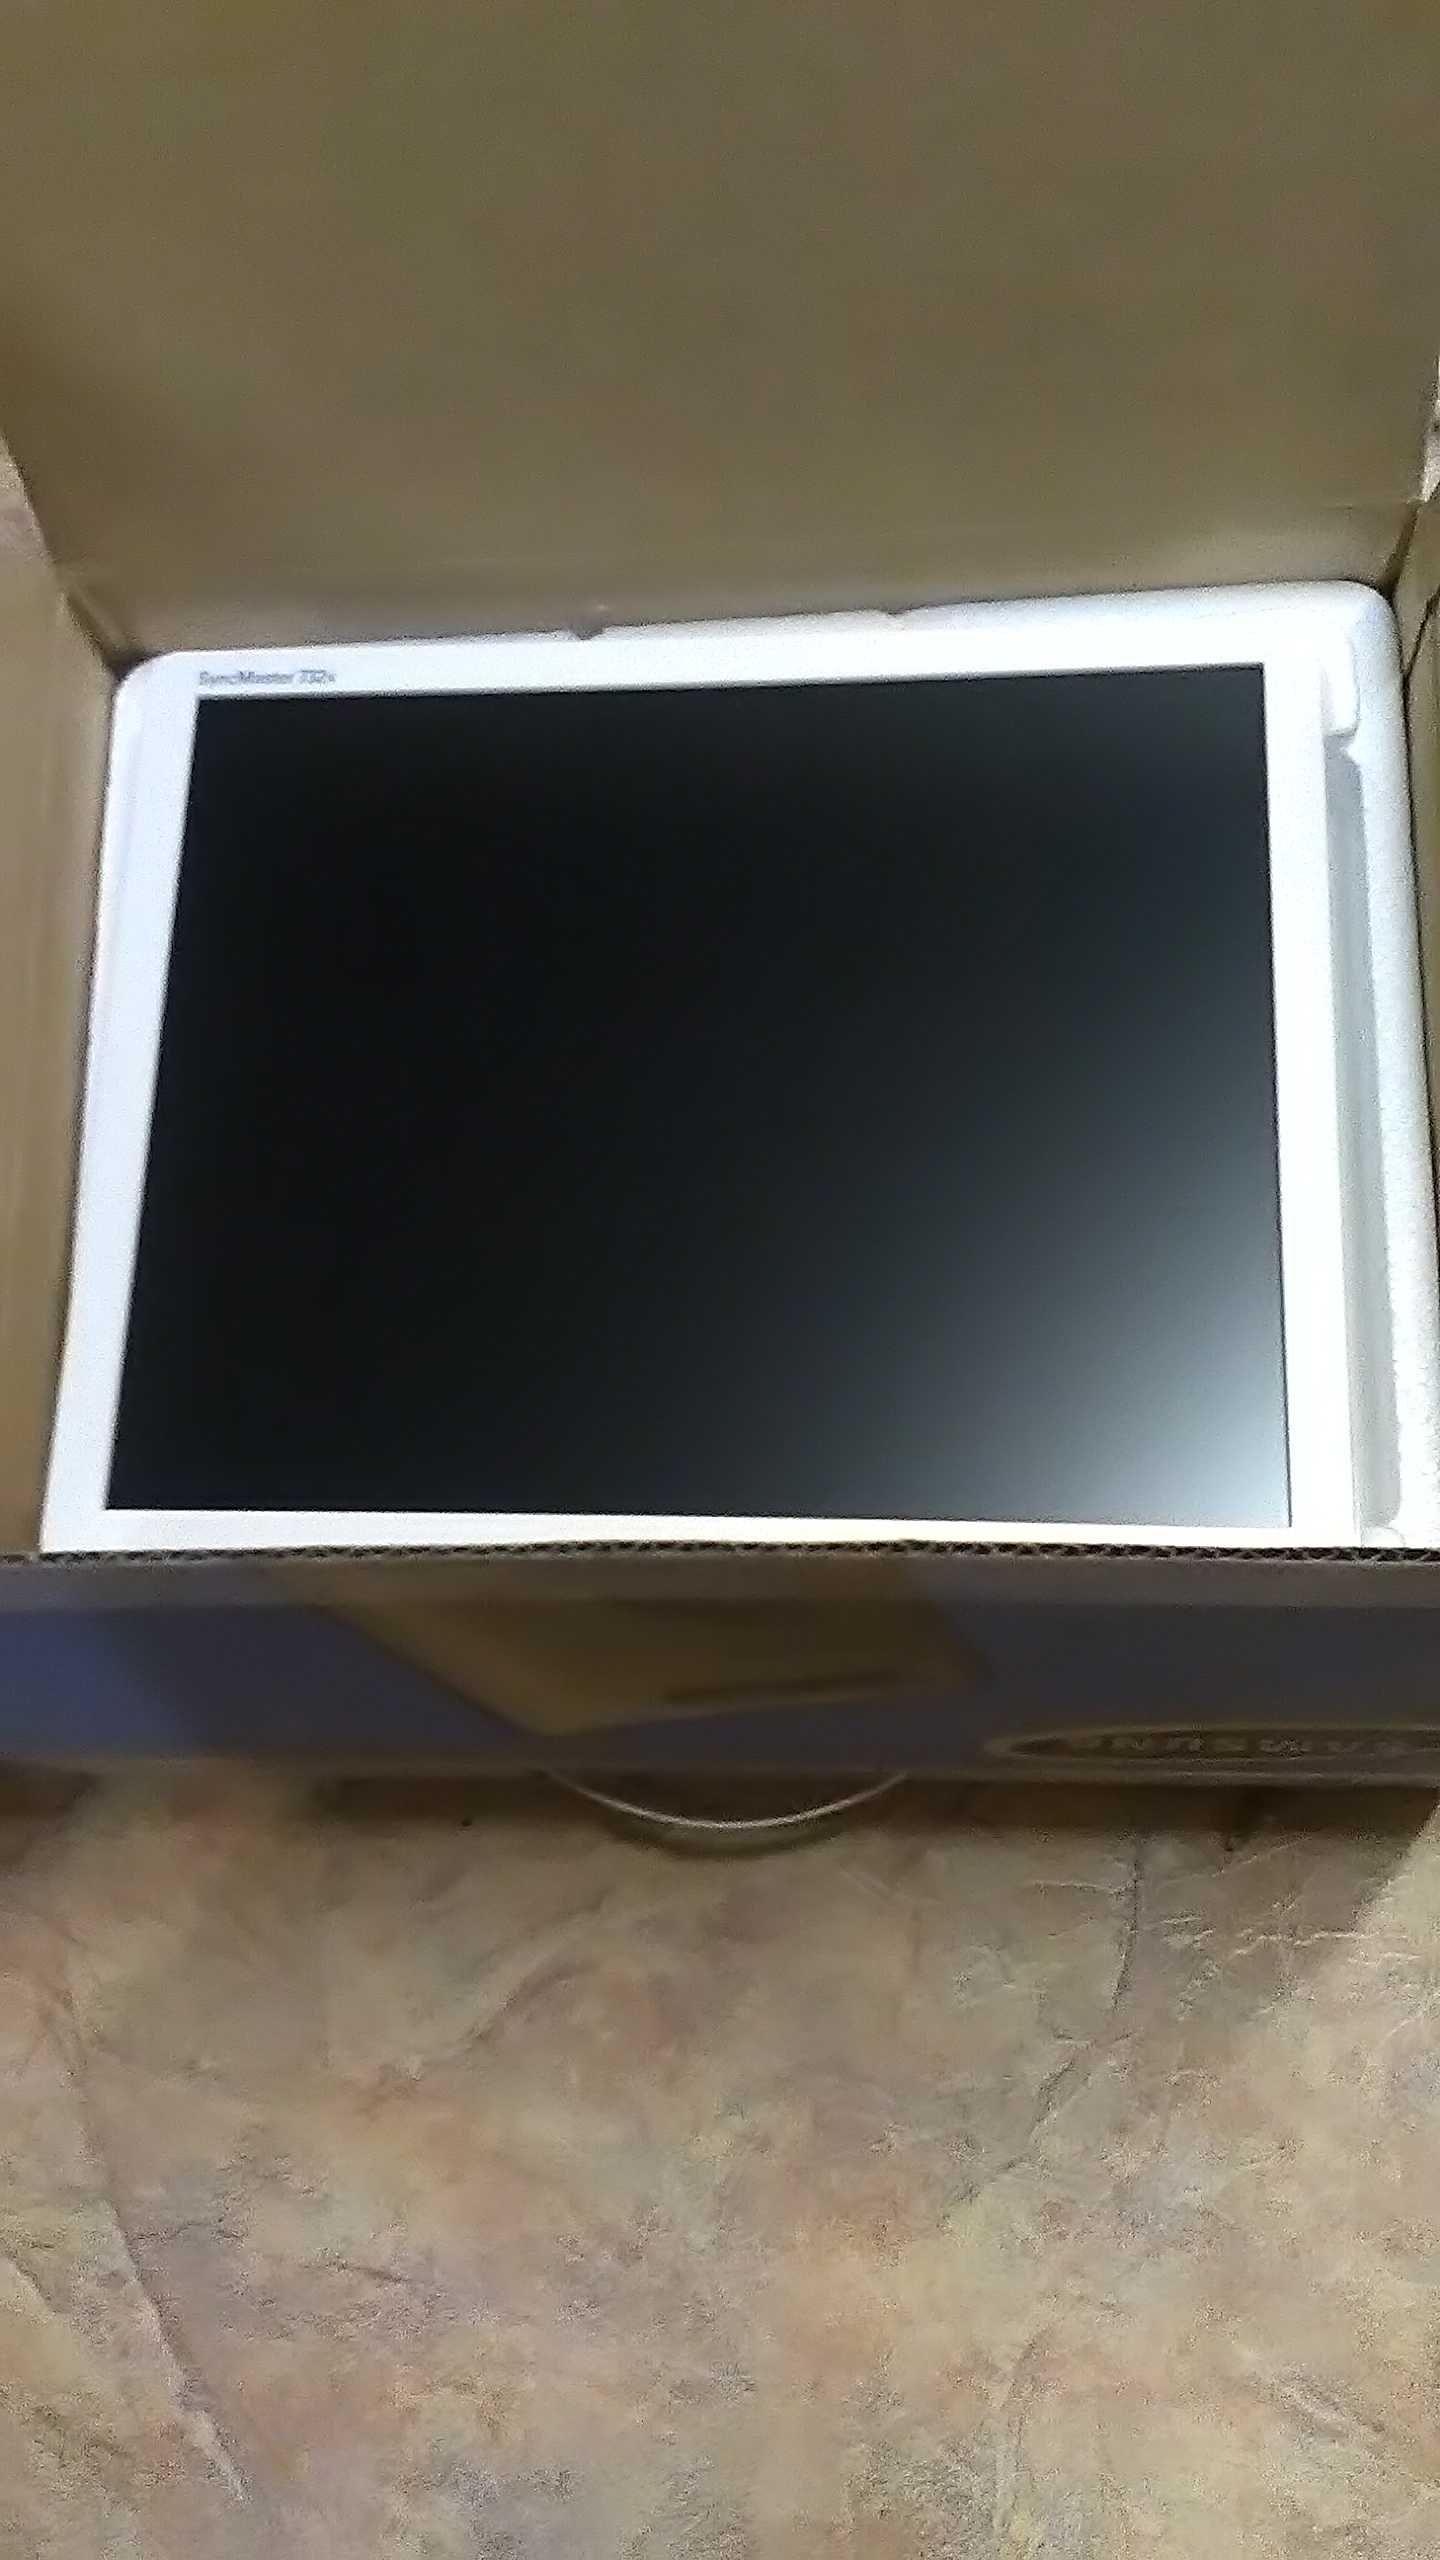 Монитор Samsung SM 732N LS17PEASW, 17", 1280 x 1024, 5:4, VGA, белый